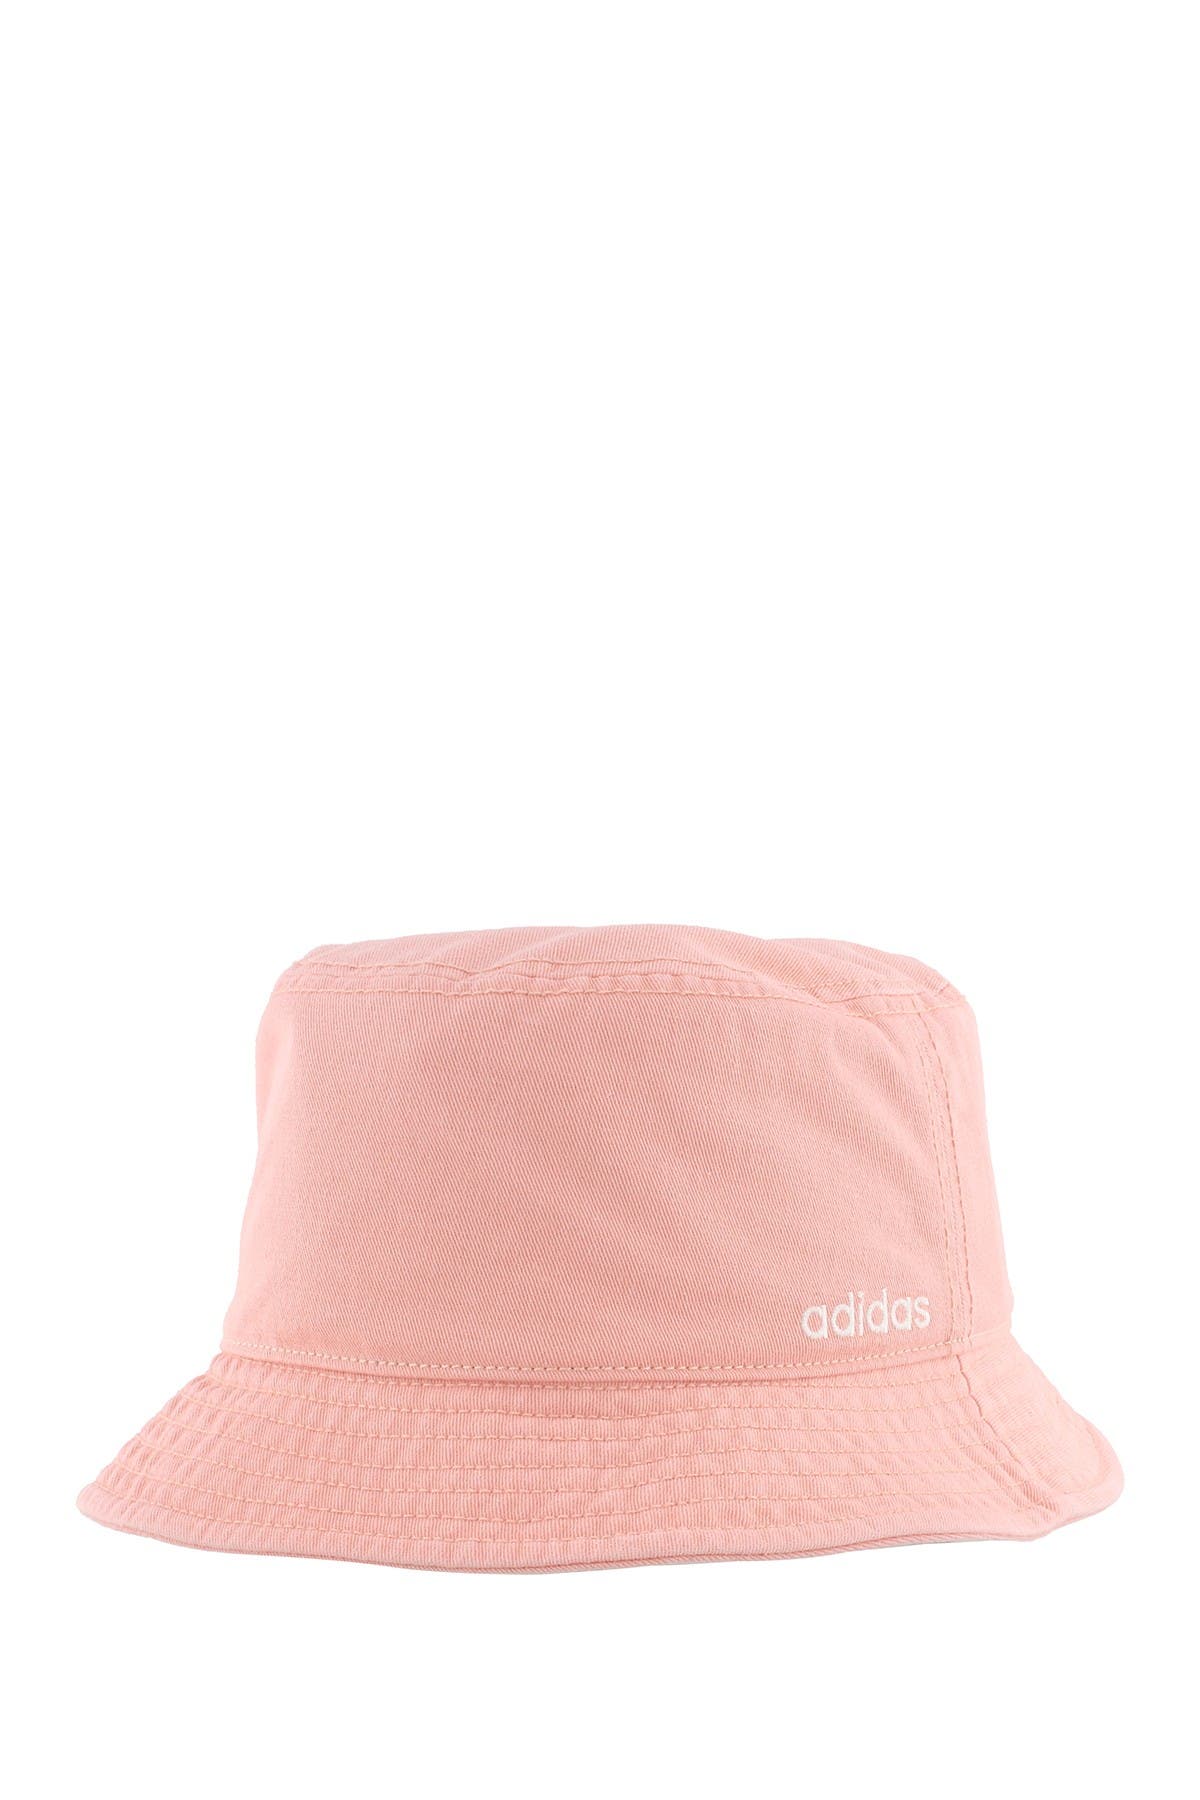 adidas bucket hat pink